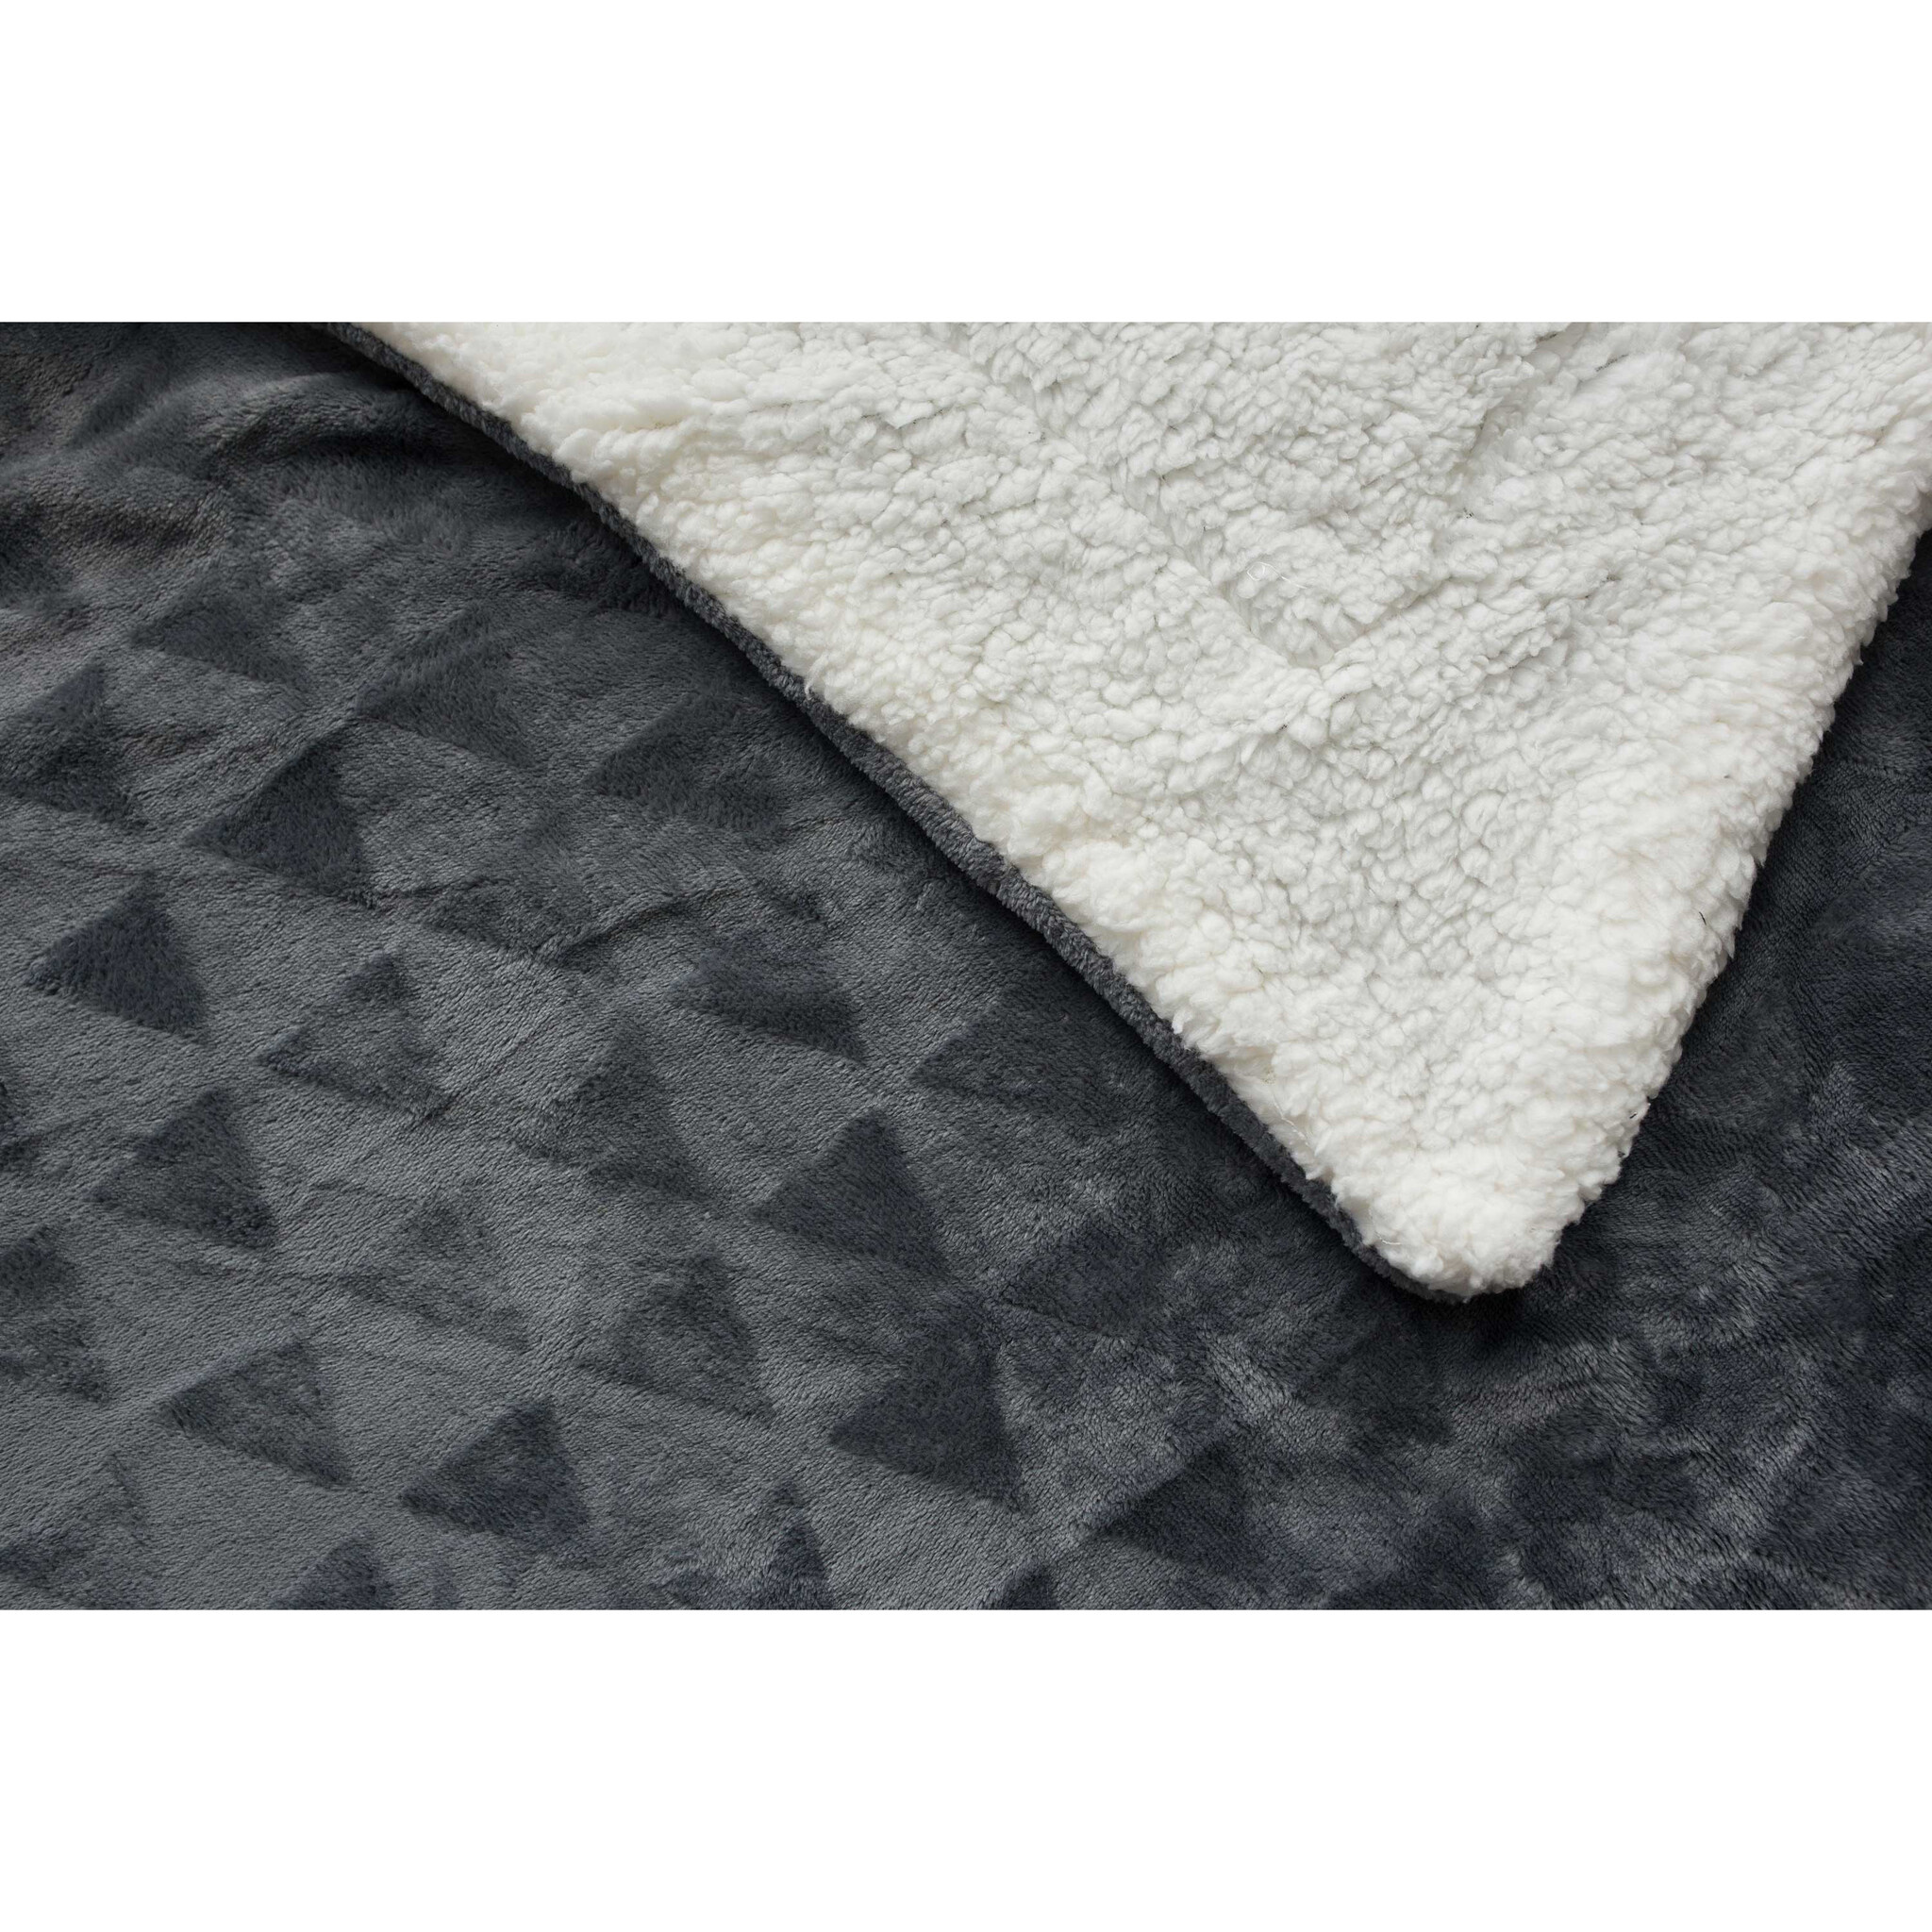 Sweet Home Sherpa Fleece plaid, Dark gray - 150 x 200 cm - Polyester